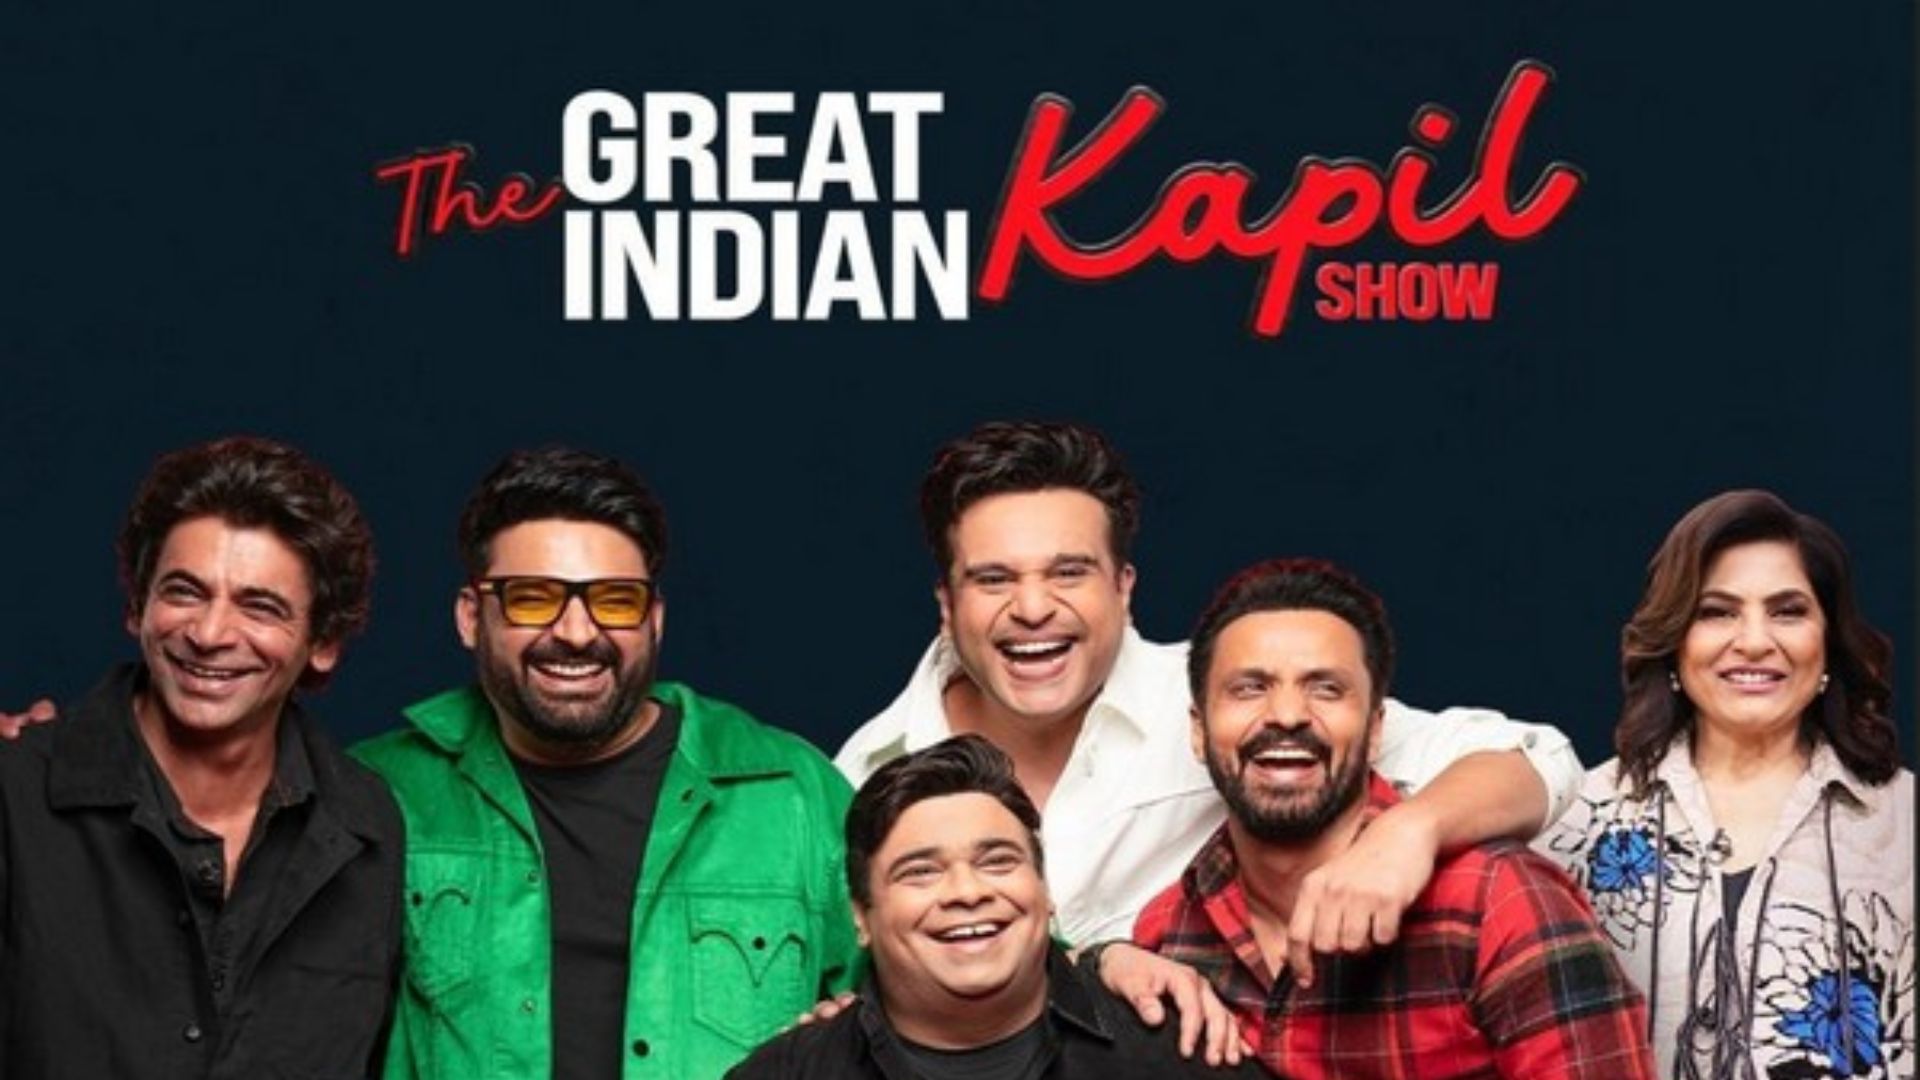 Kapil Sharma’s “The Great Indian Kapil Show” to Stream on OTT Platform Soon